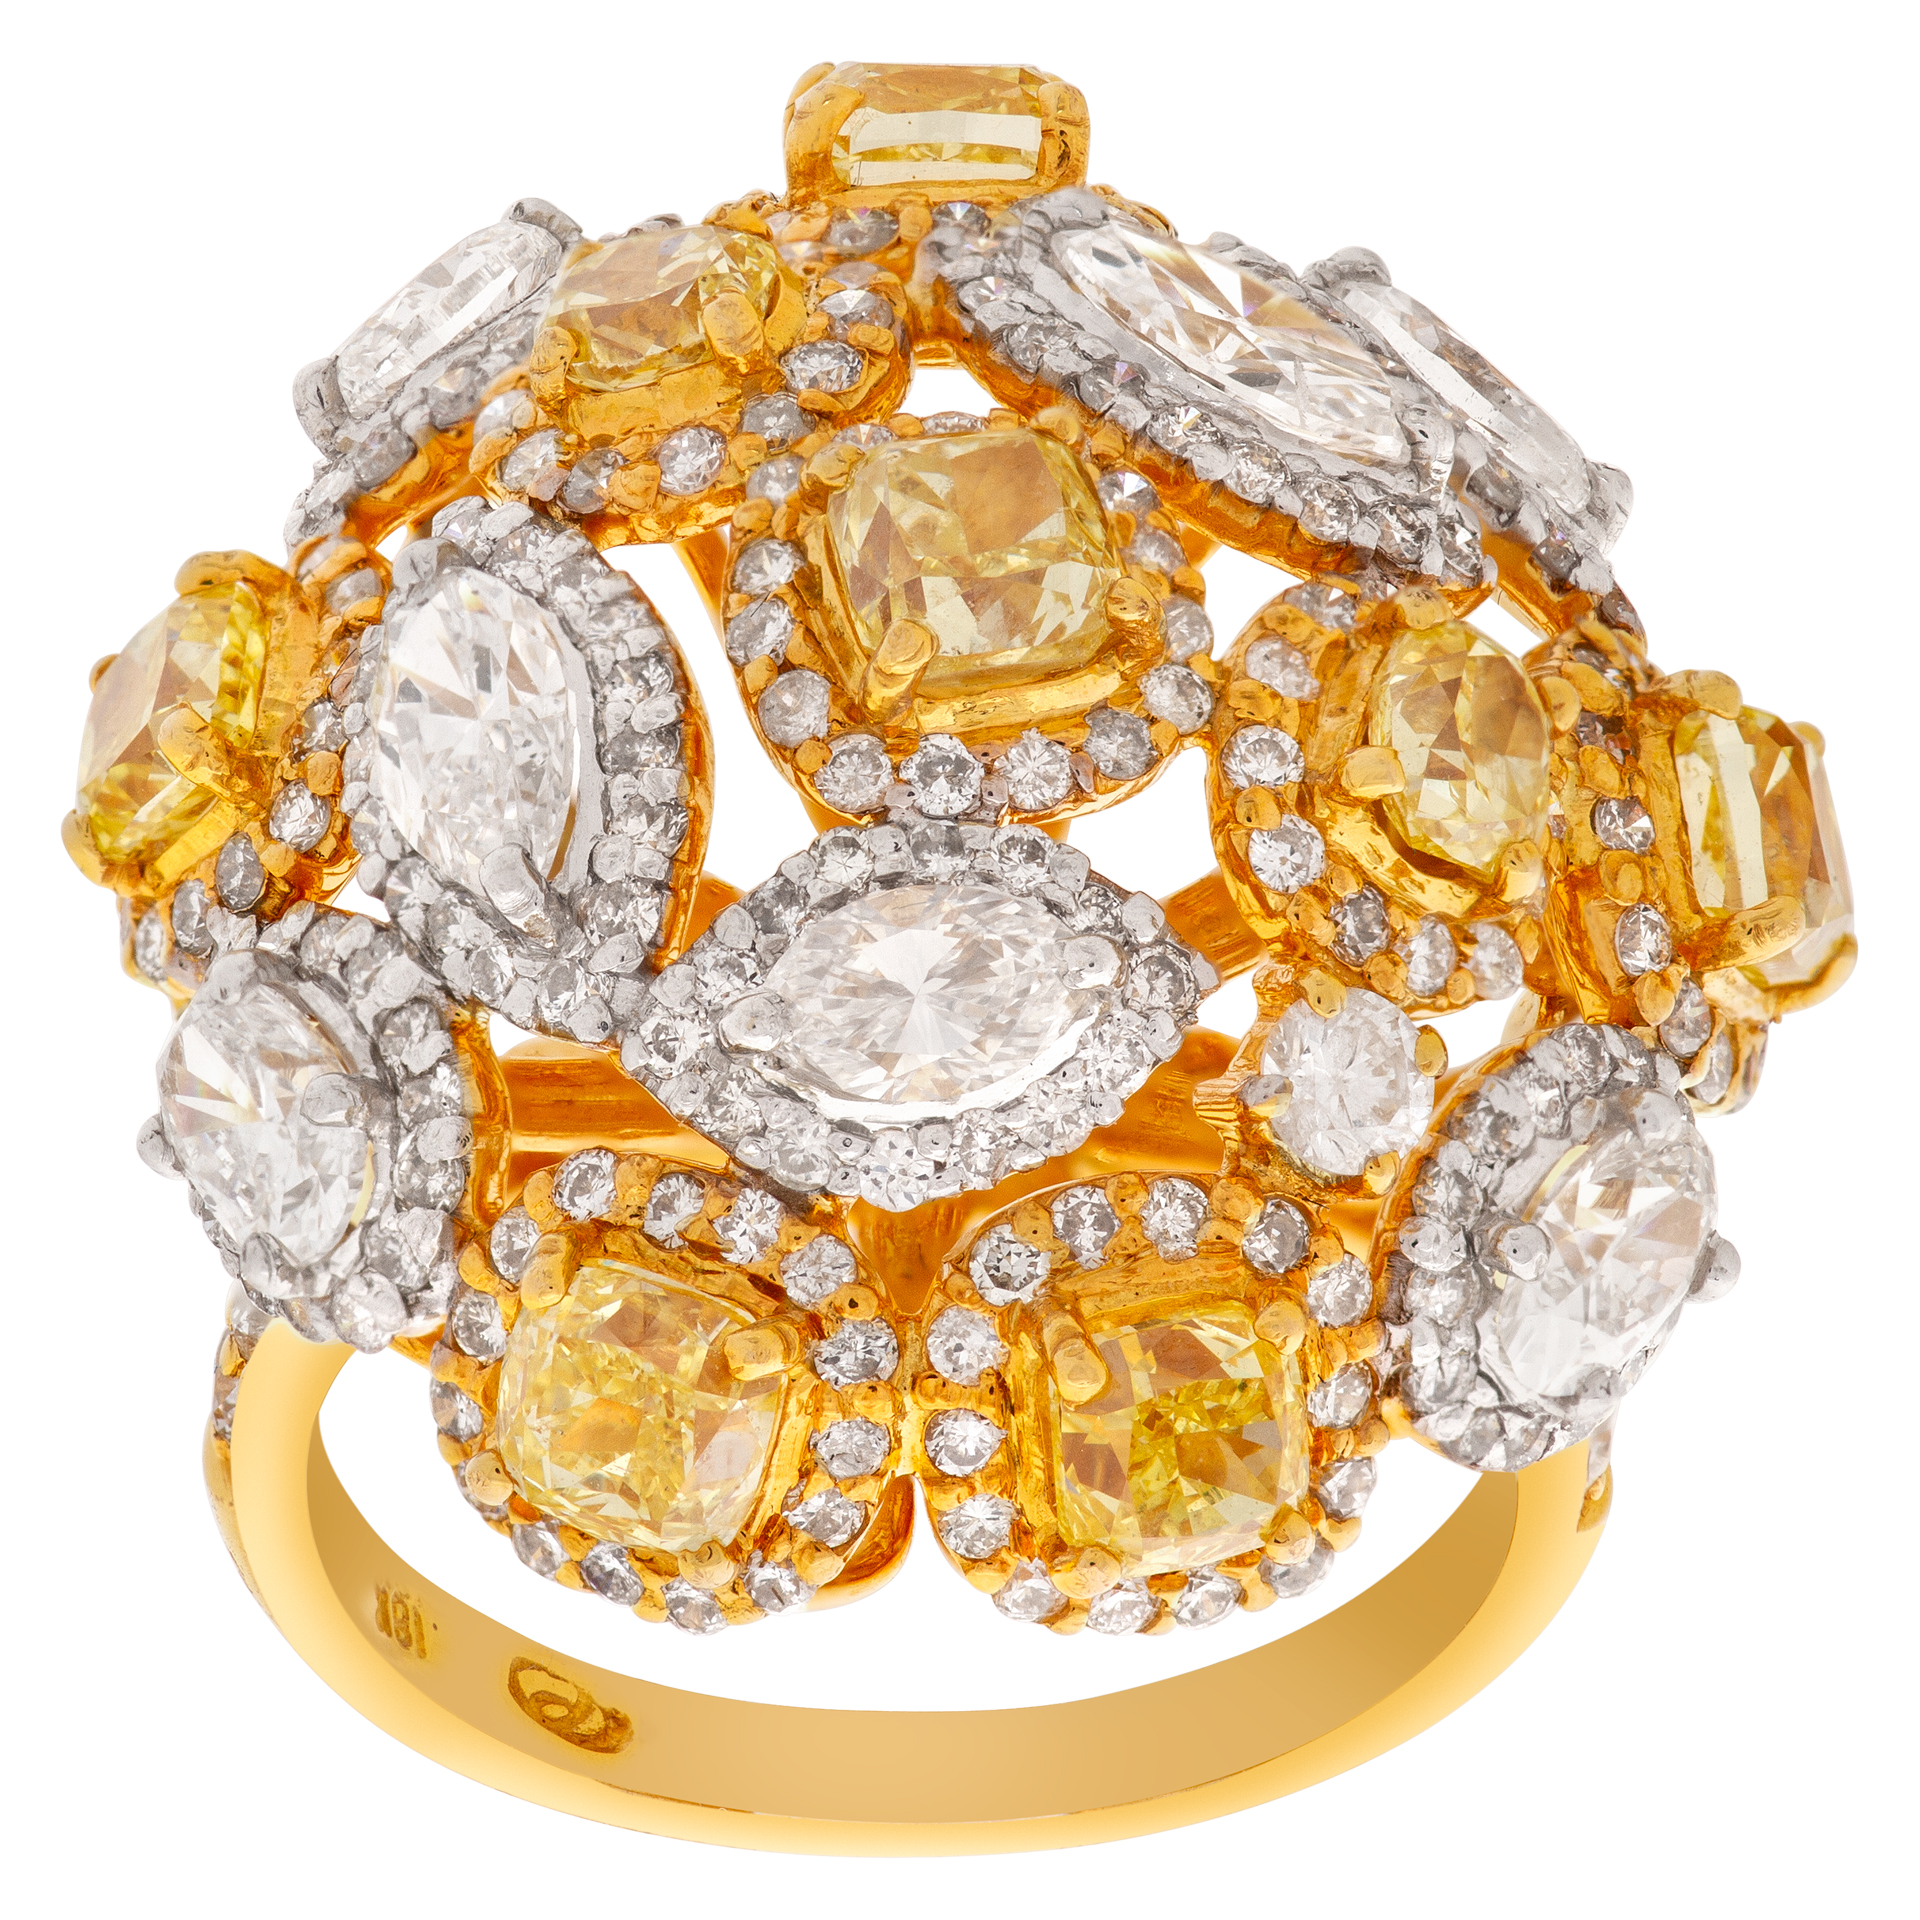 Fancy yellow diamond ring set in 18k image 1